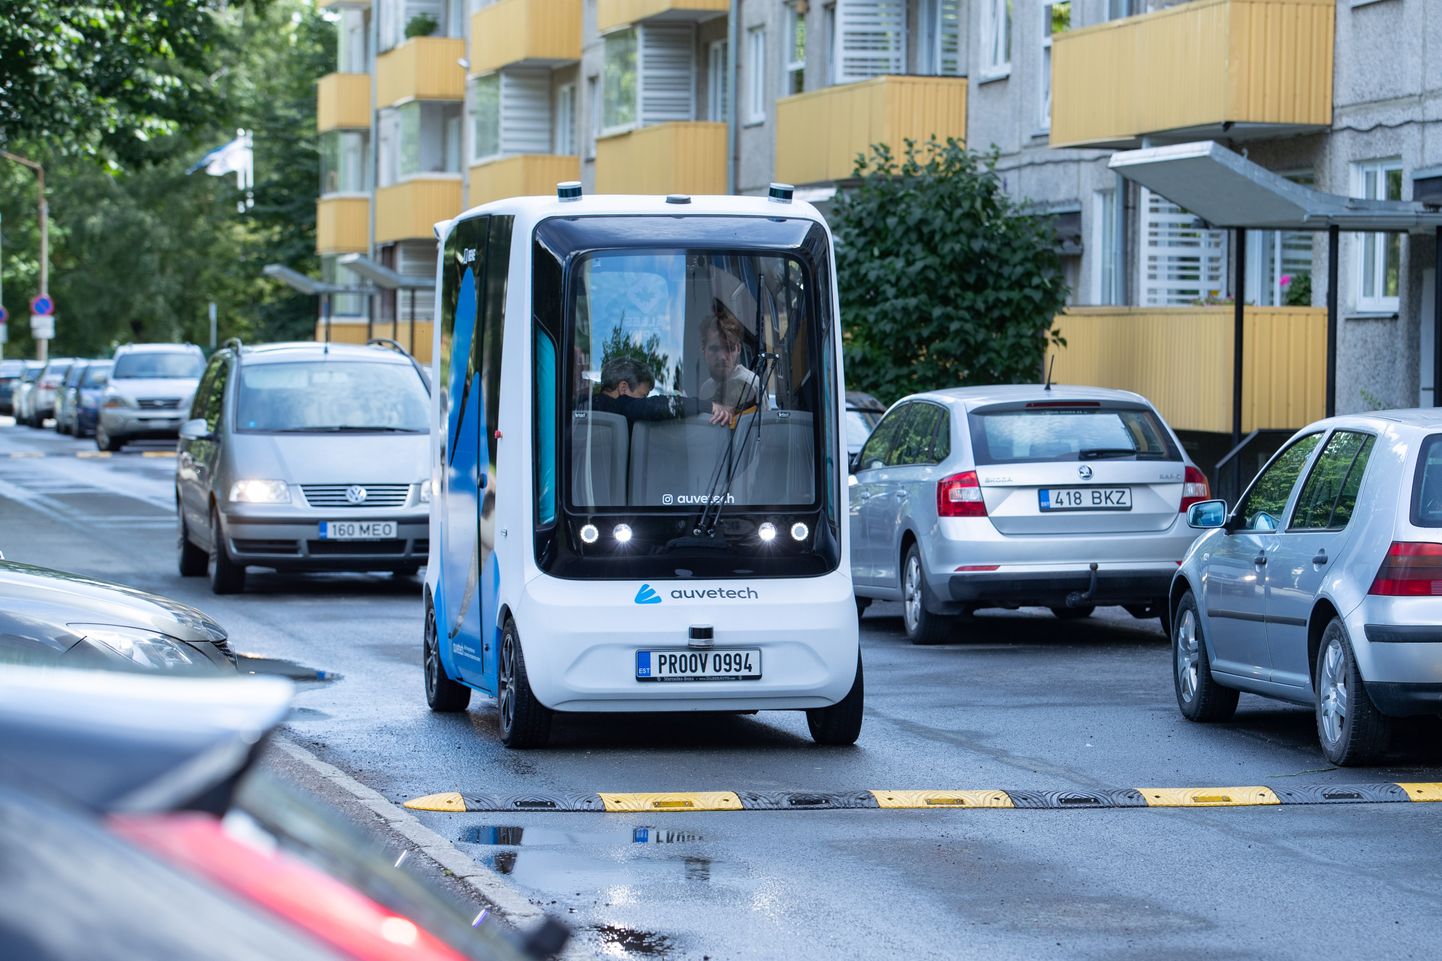 Silberauto tütarfirma Auve Tech OÜ toodetud isejuhtiv buss Mustamäel.